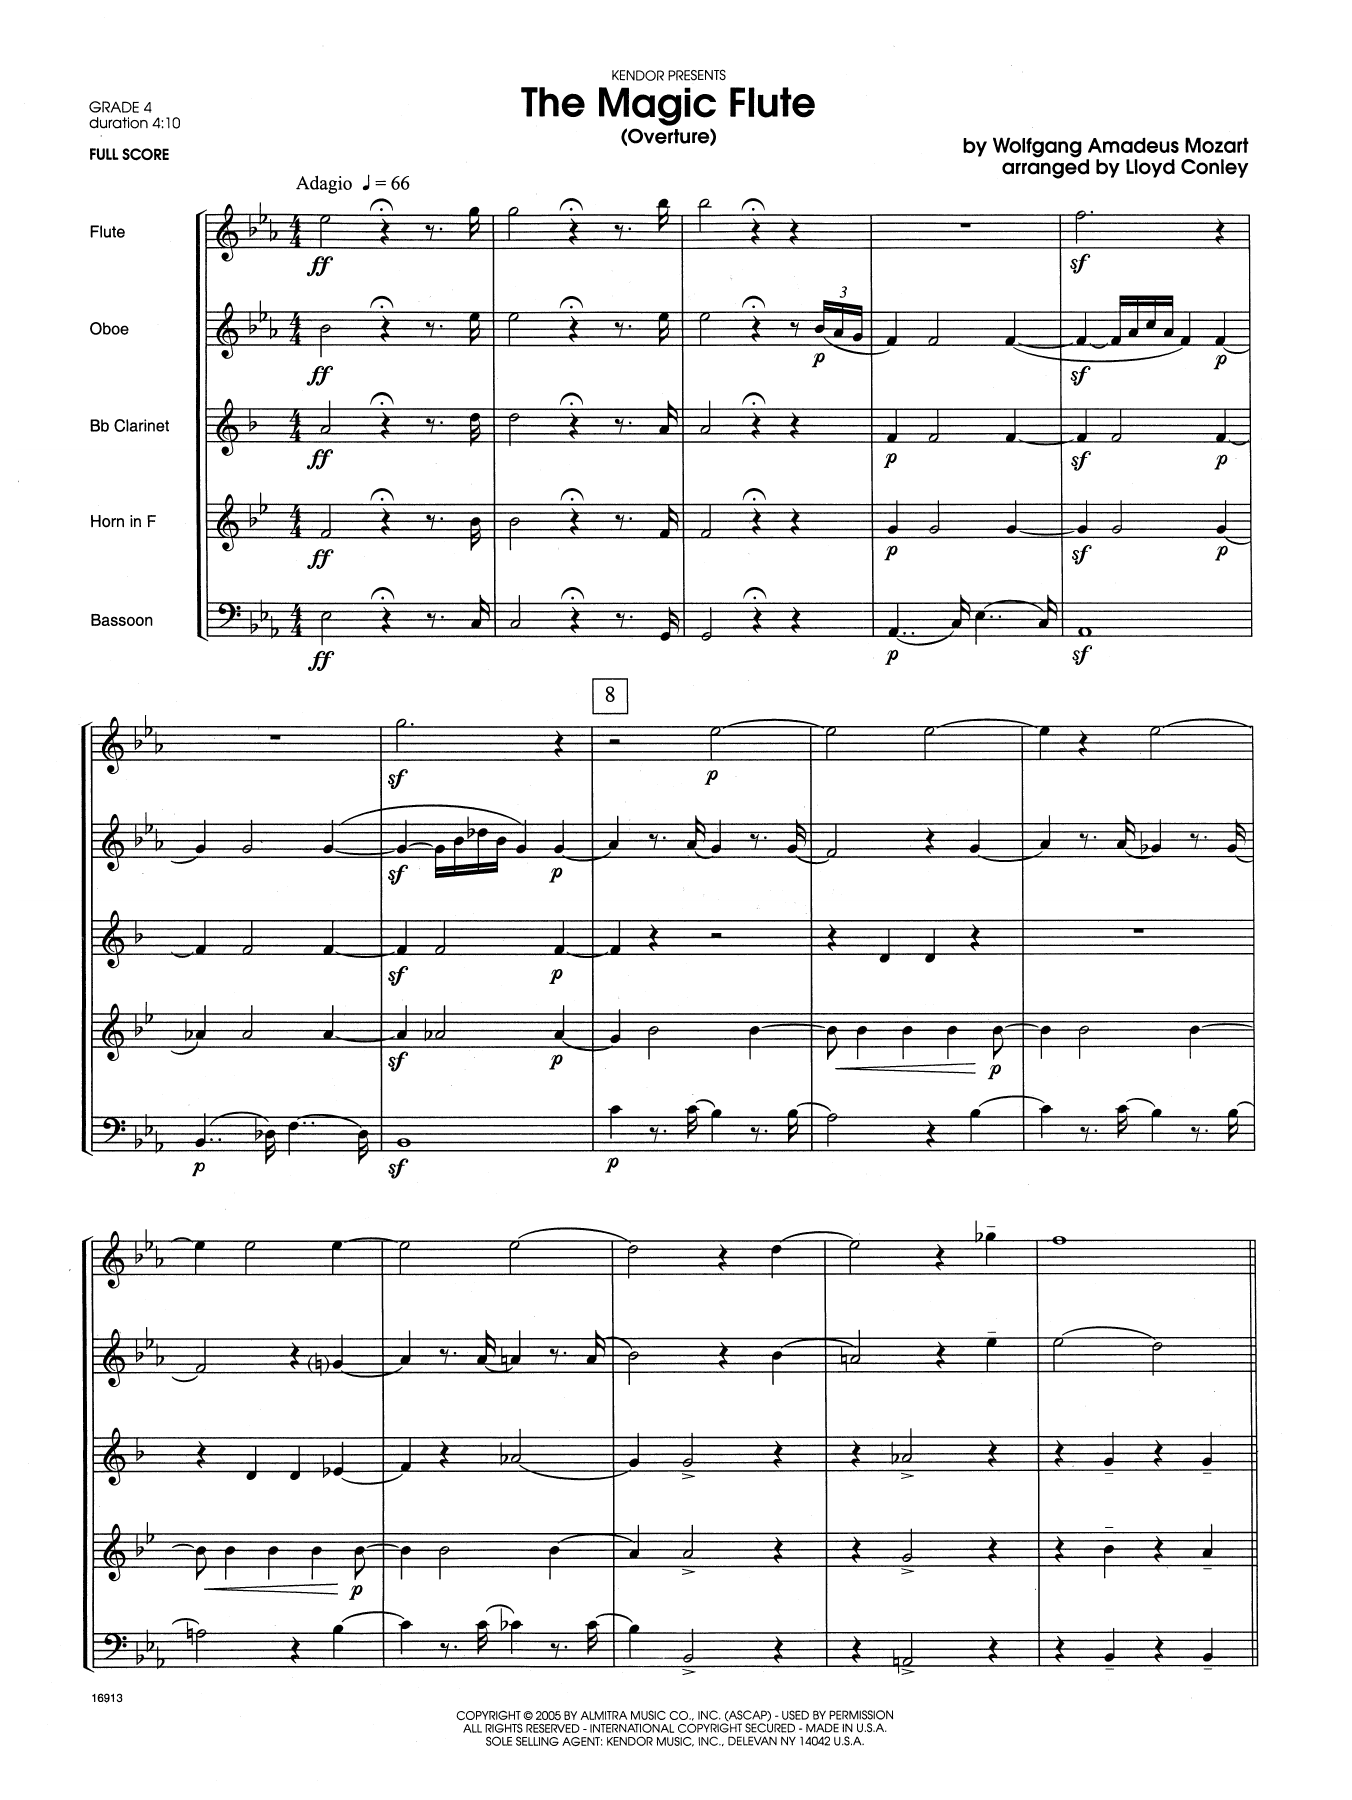 Download Lloyd Conley The Magic Flute (Overture) - Full Score Sheet Music